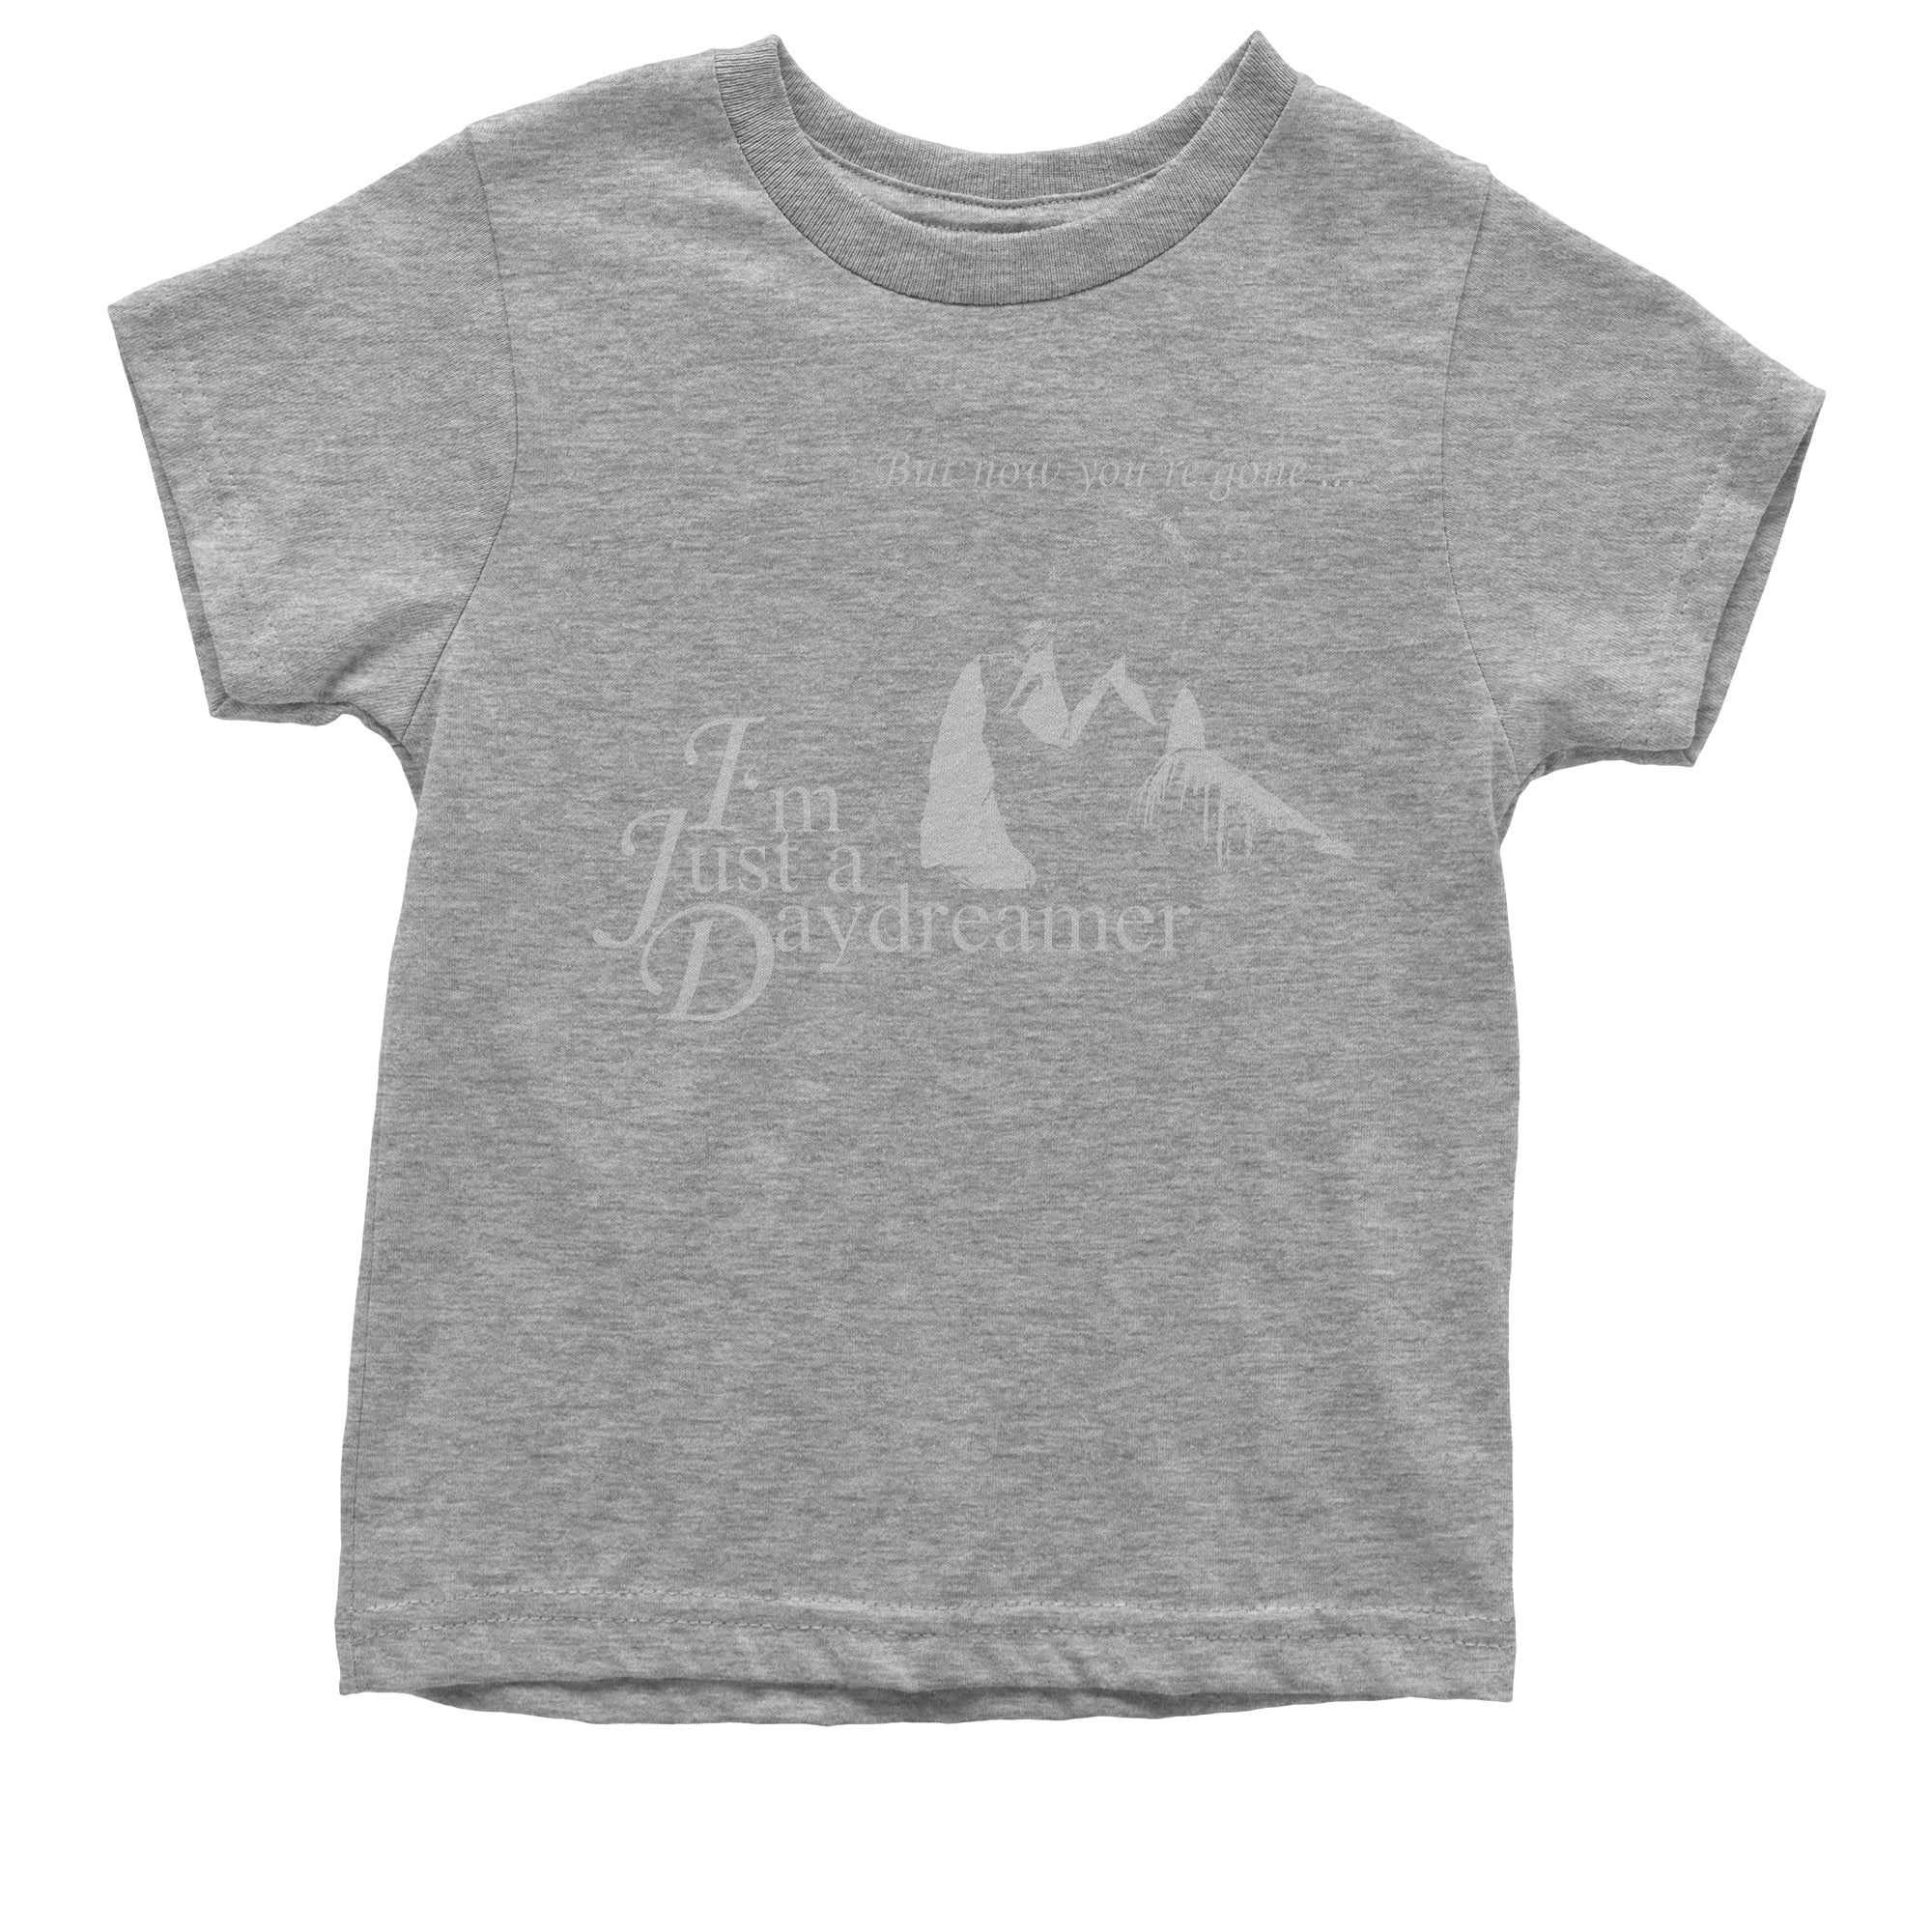 Cassidy Daydreamer Tribute Kid's T-Shirt